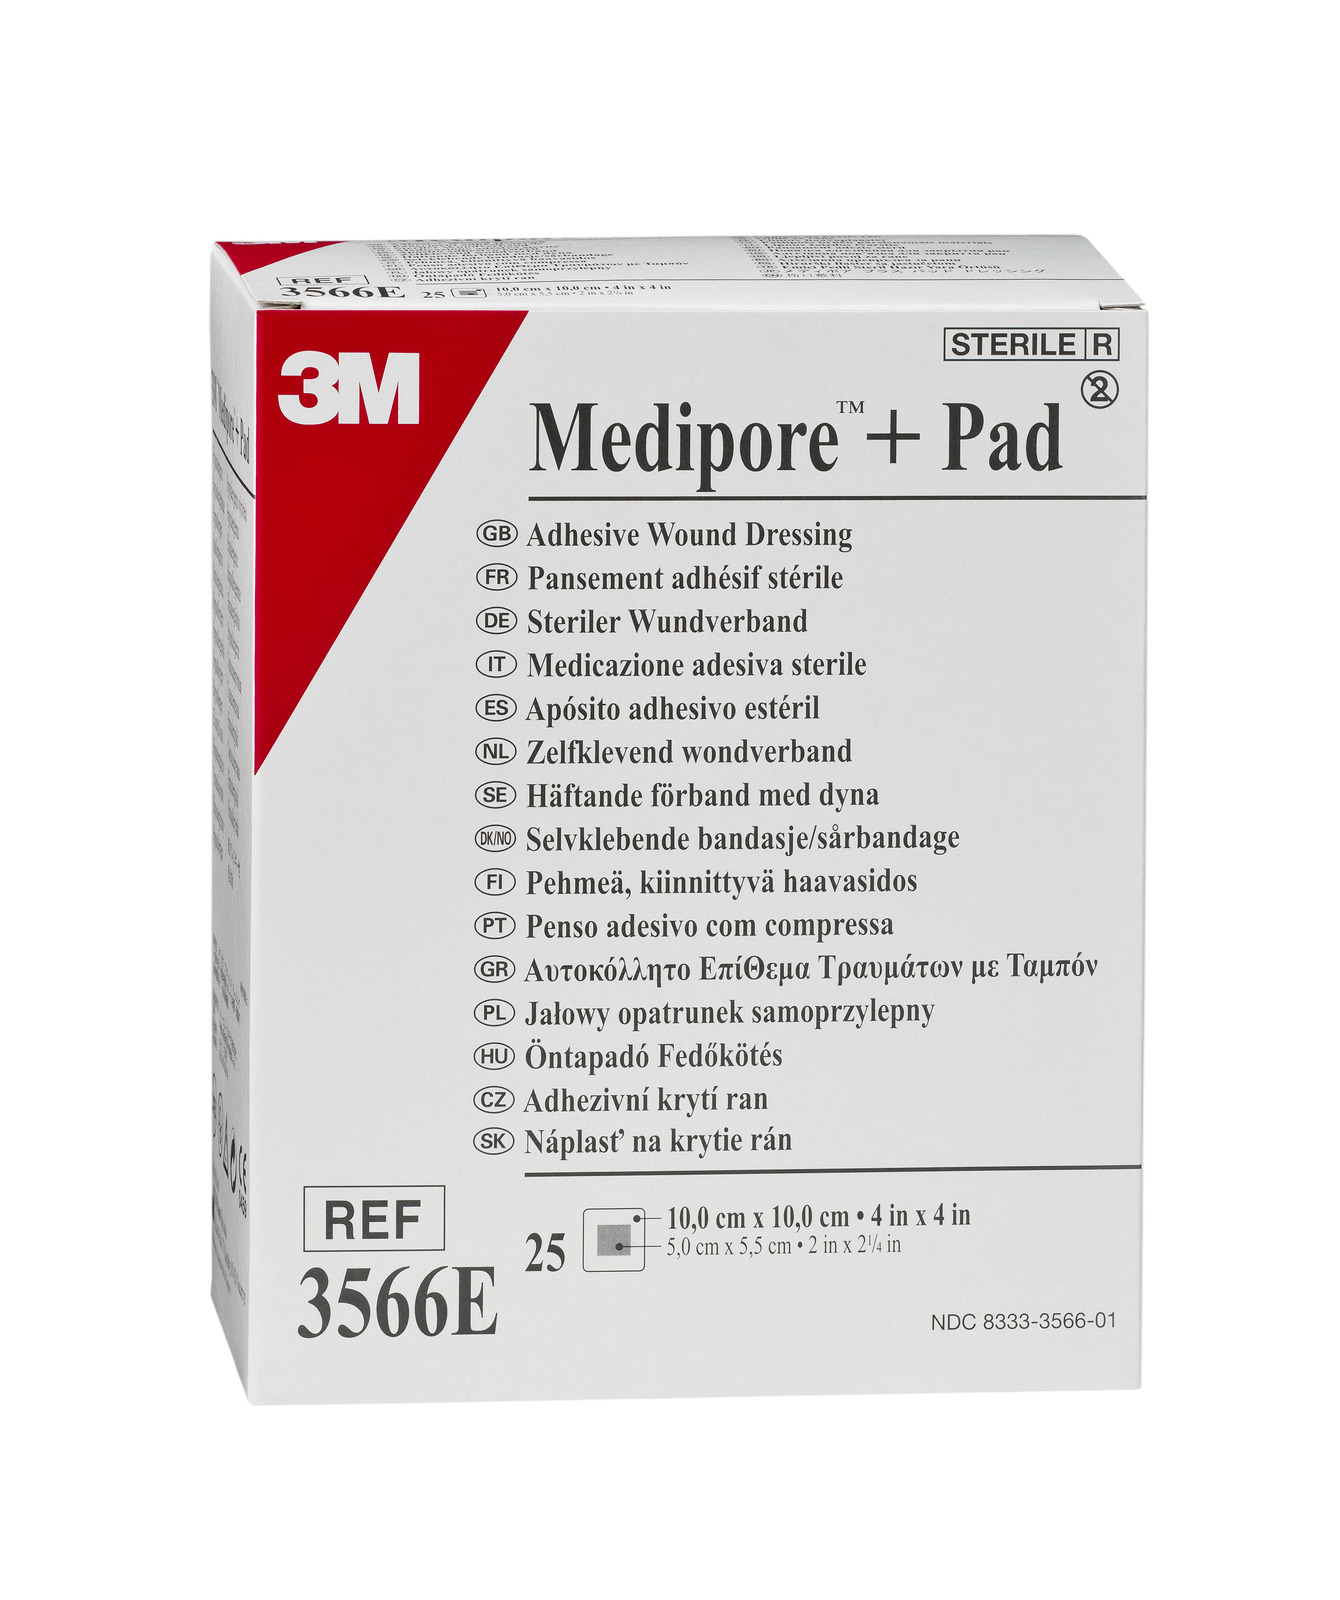 3M™ Medipore™ + Pad Steriler Wundverband mit Wundauflage, 3566E, 10 cm x 10 cm, 25 Stück/Packung